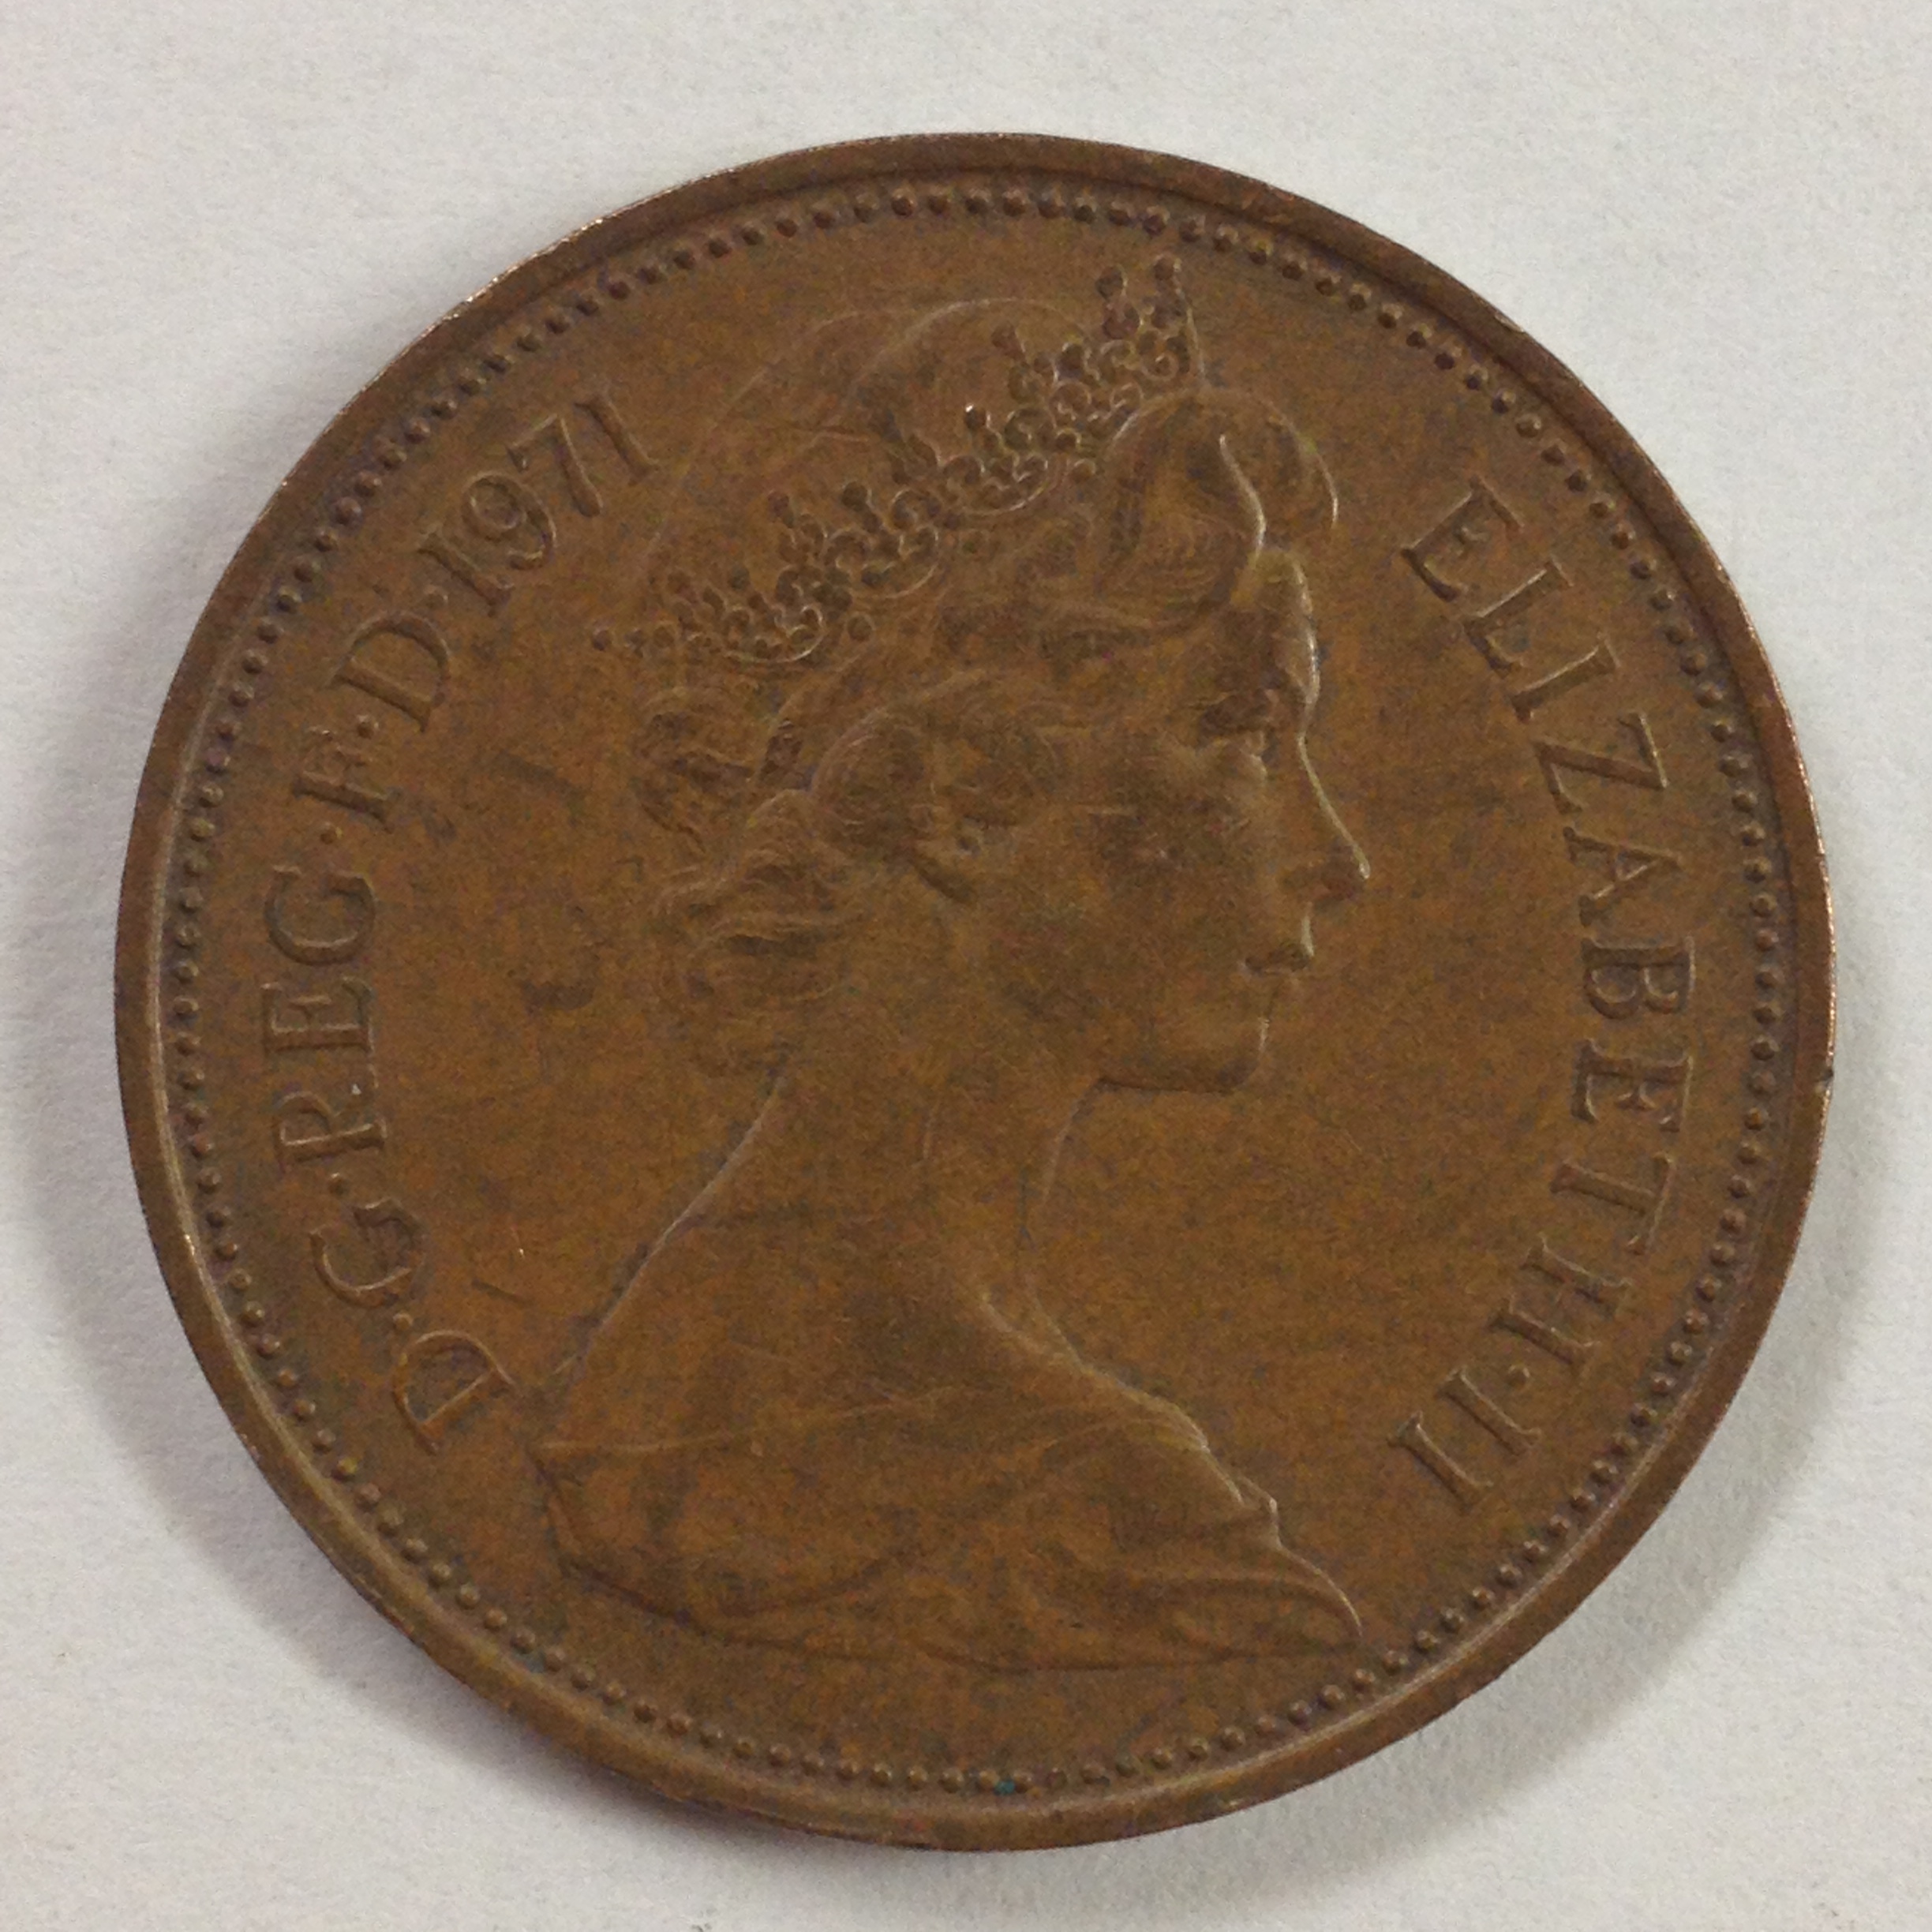 2 pence 1971